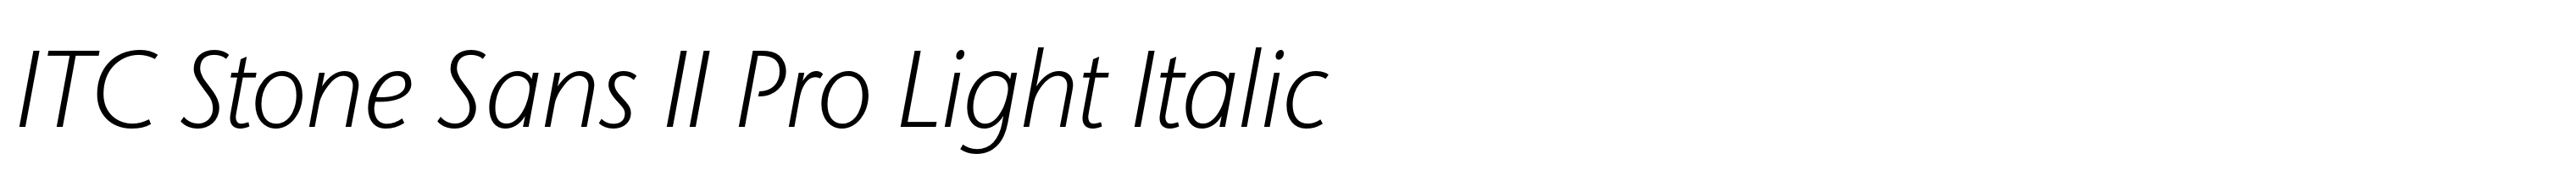 ITC Stone Sans II Pro Light Italic